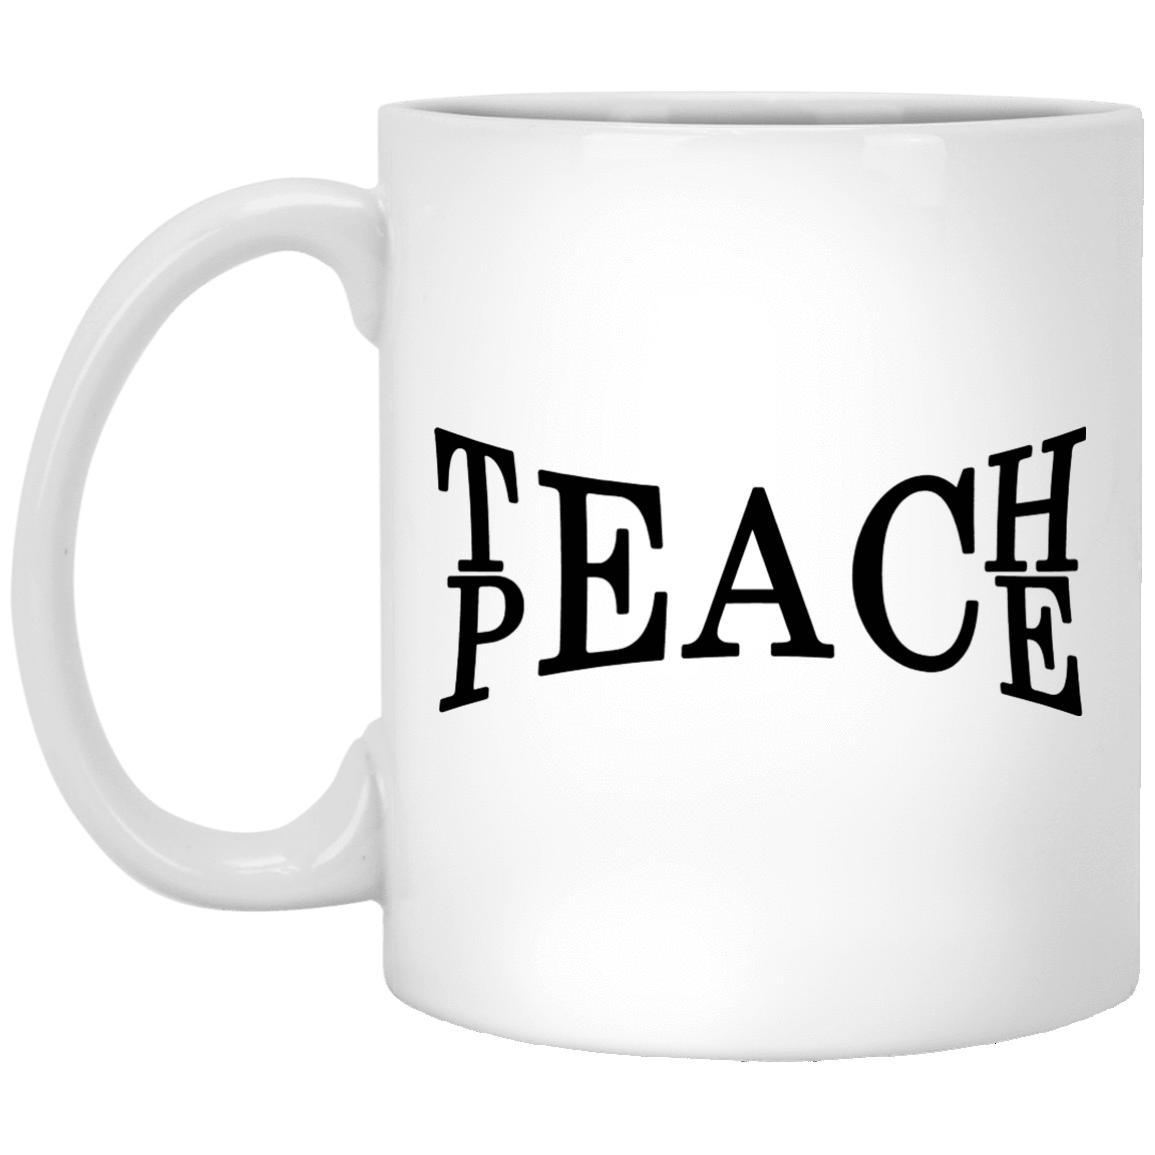 Teach Peace Mugs